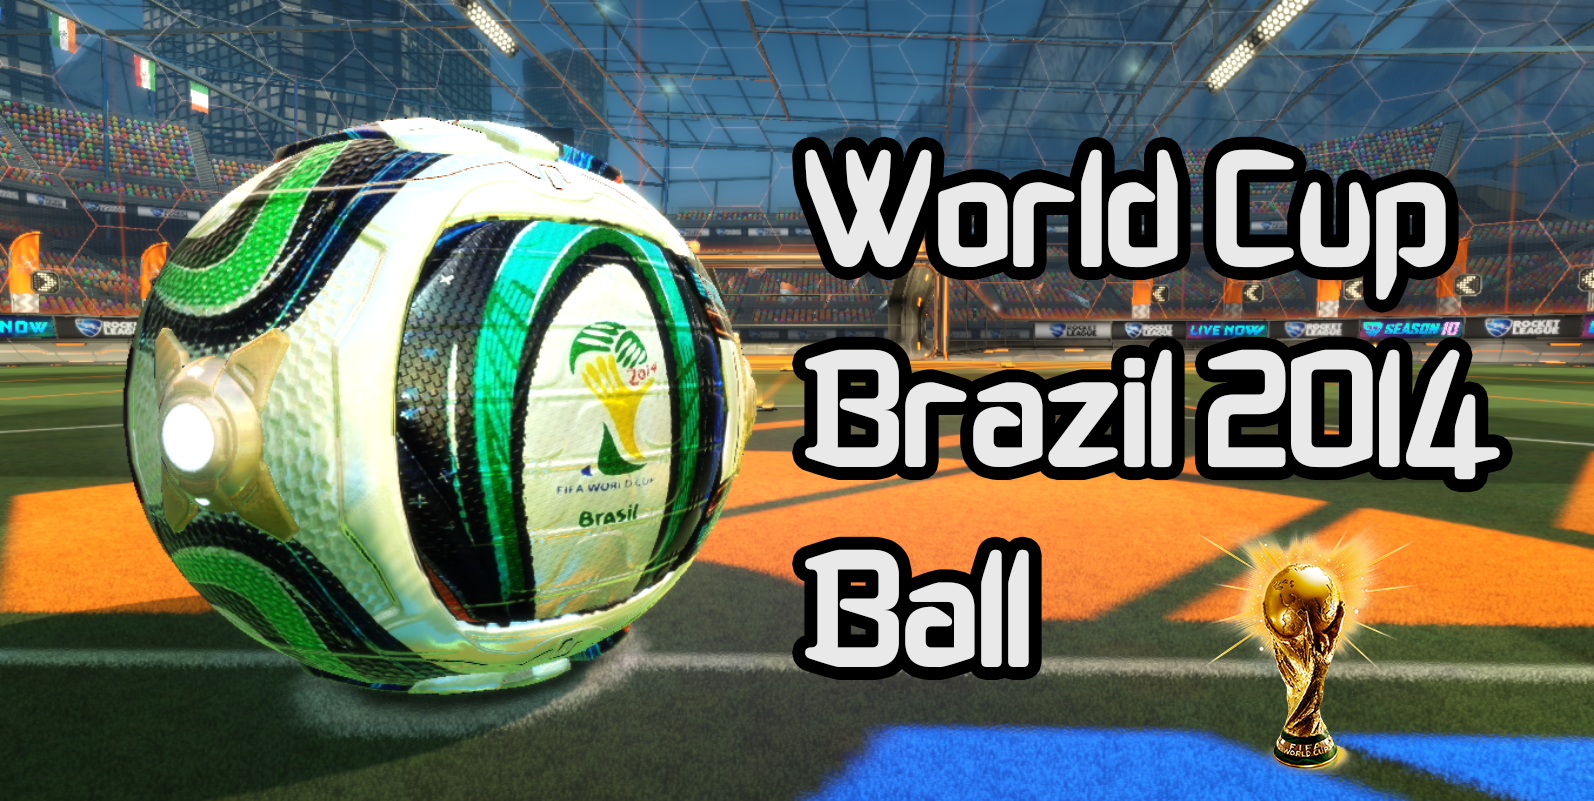 World Cup Brazil 2014 – Ball Brazuca